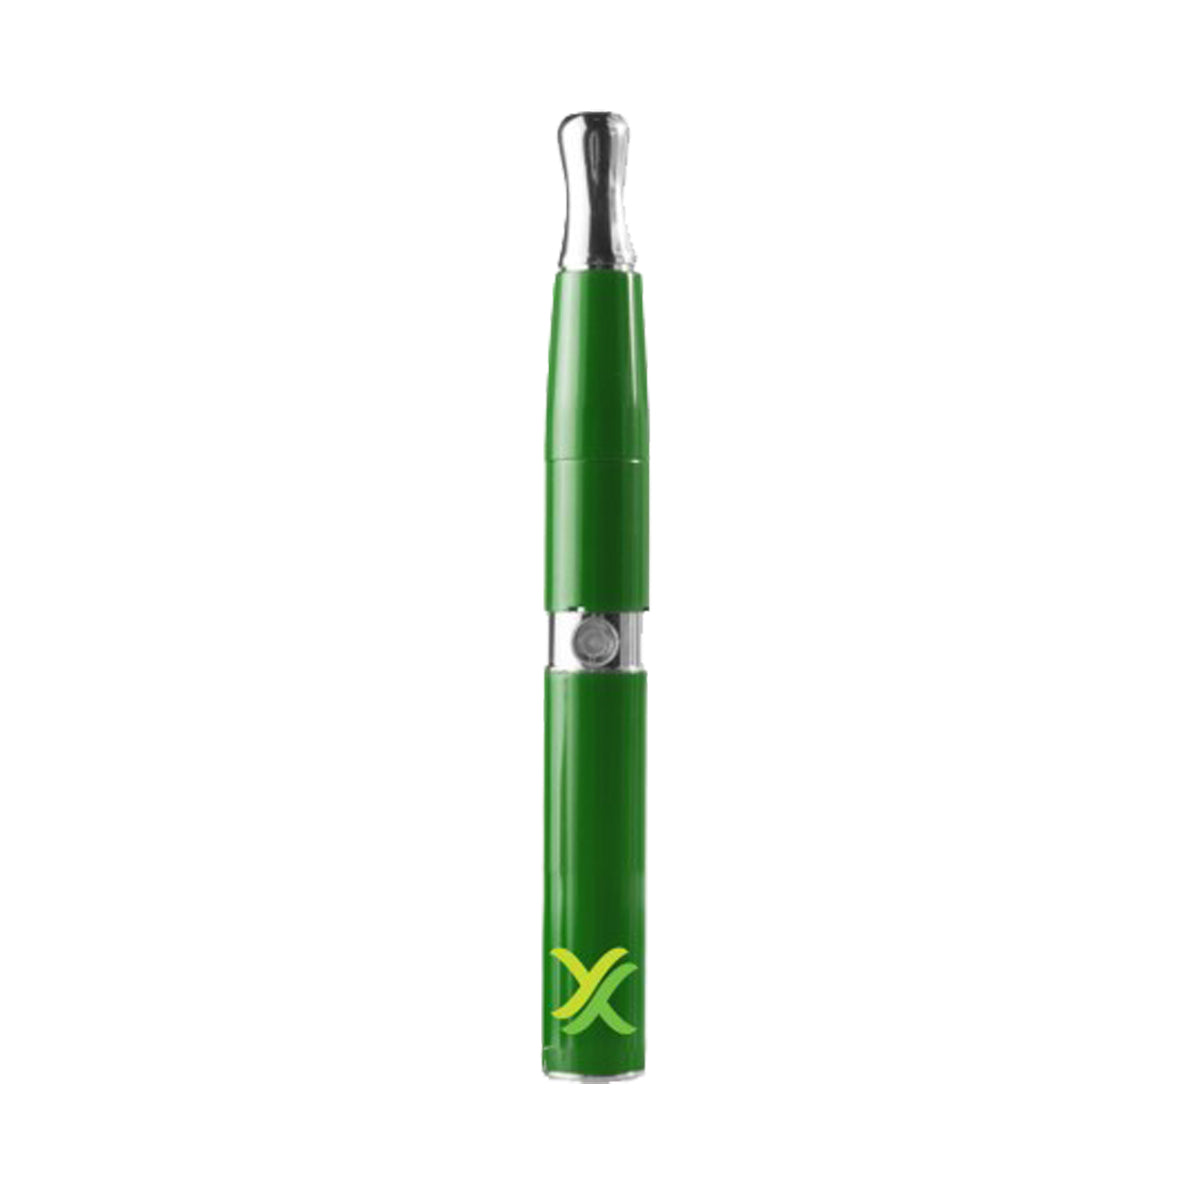 Exxus Vape Pen | Maxx Concentrate Kit Vaporizer | 650 mAh - Green